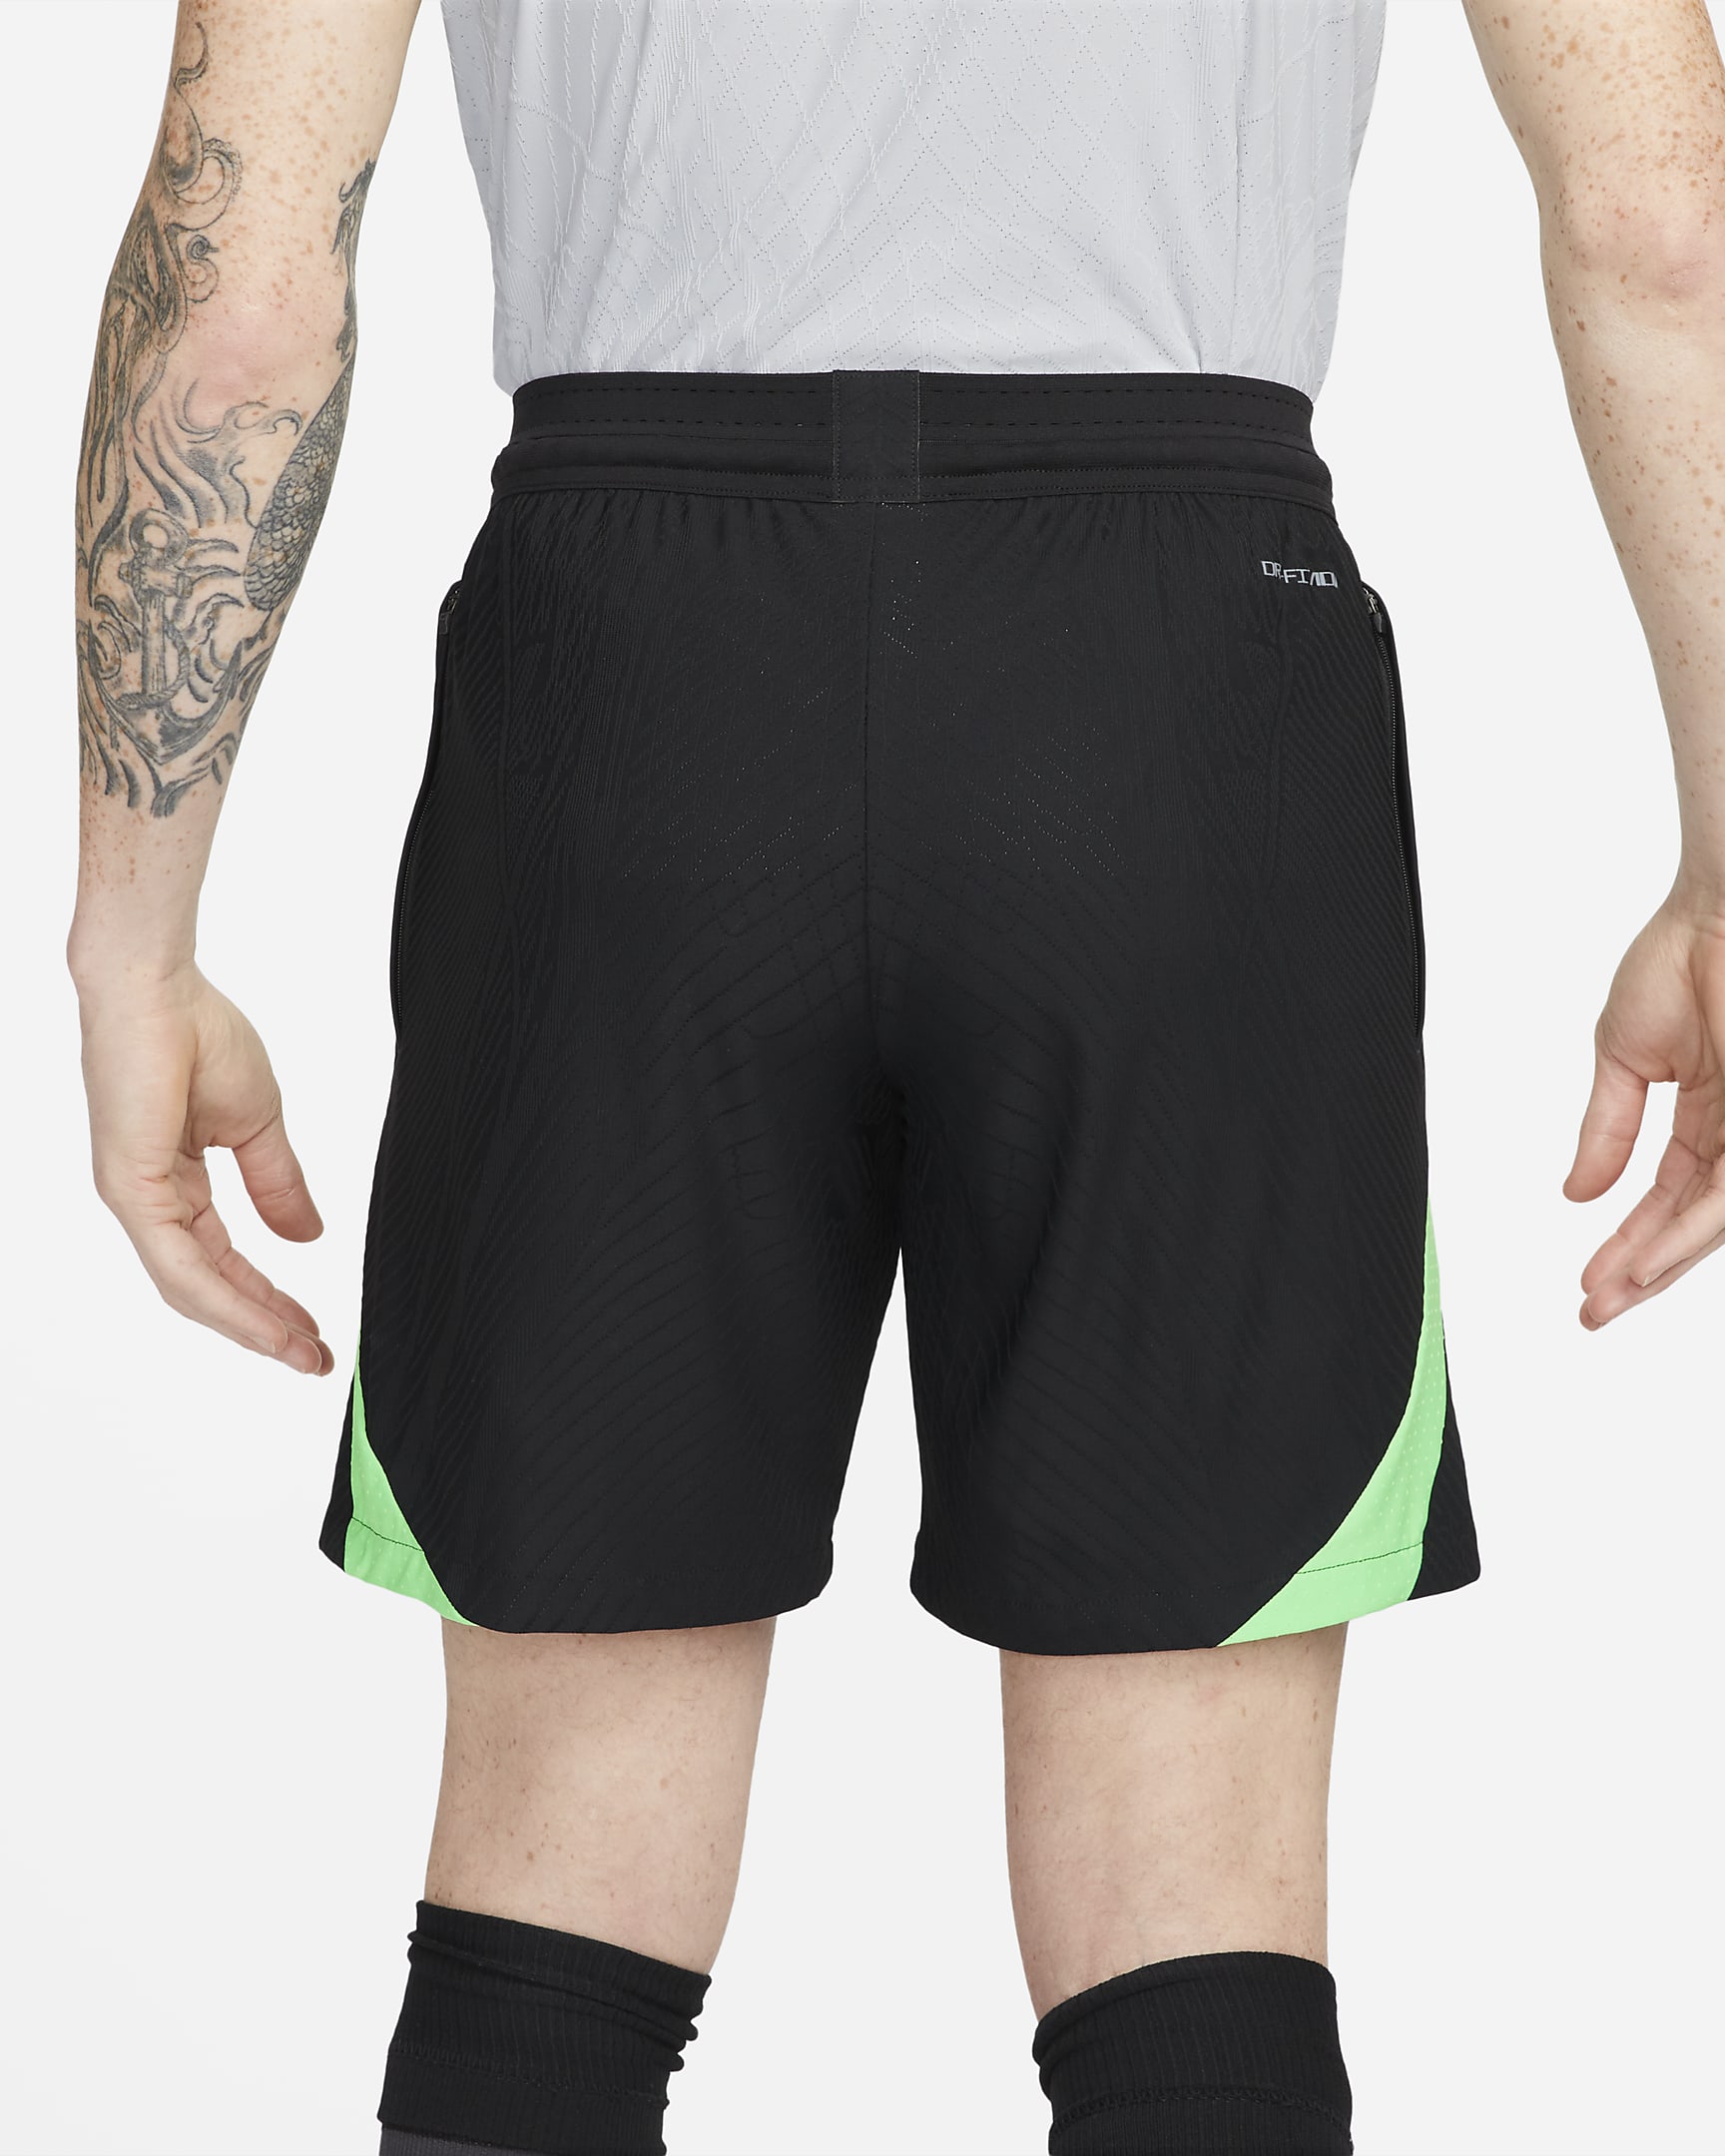 Liverpool F.C. Strike Elite Men's Nike Dri-FIT ADV Knit Football Shorts ...